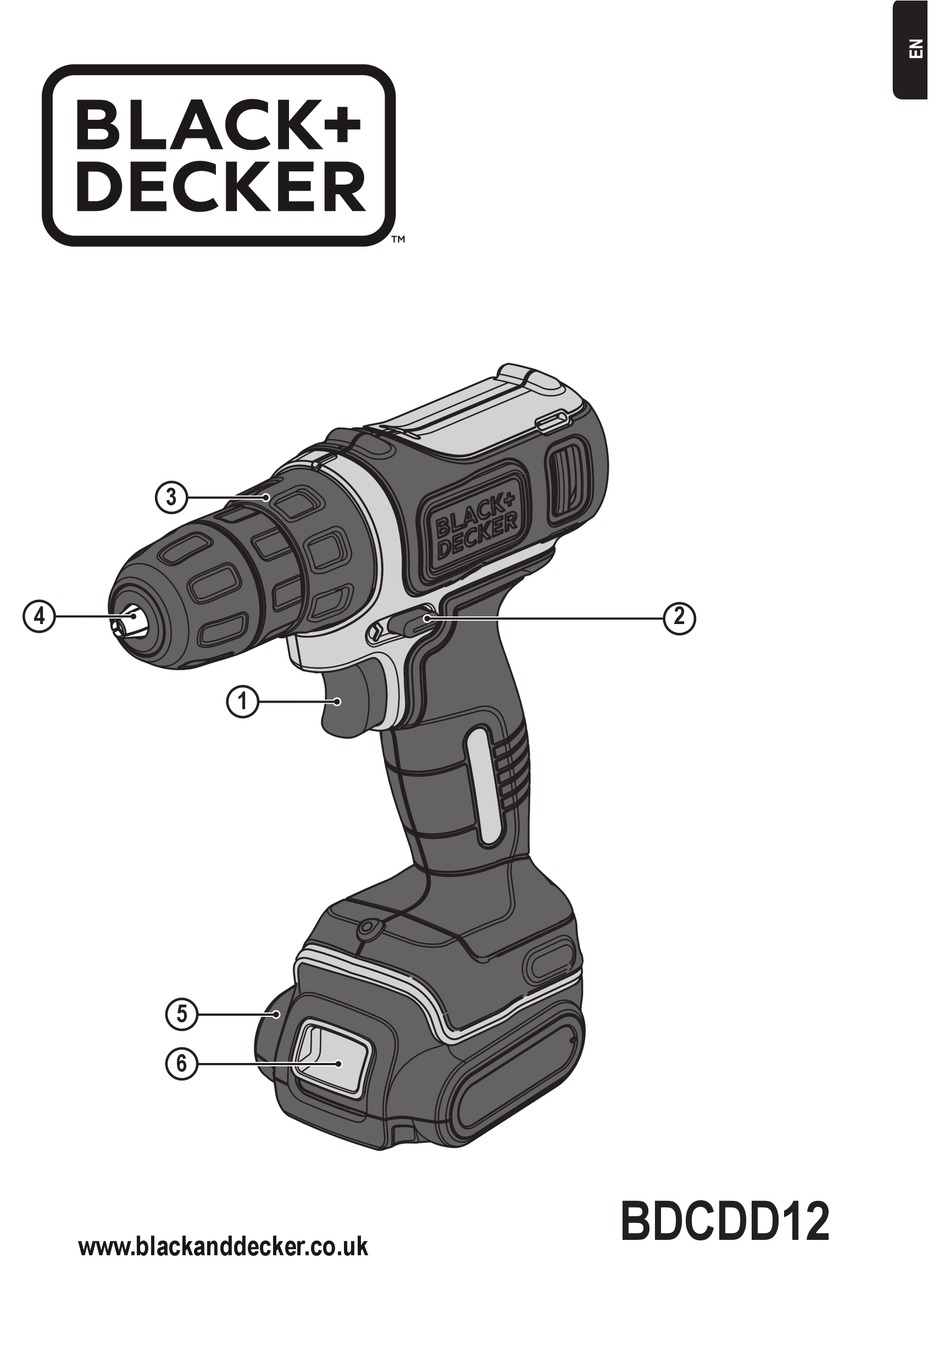 BLACK+DECKER 12V MAX Cordless Drill/Driver (BDCDD12C)